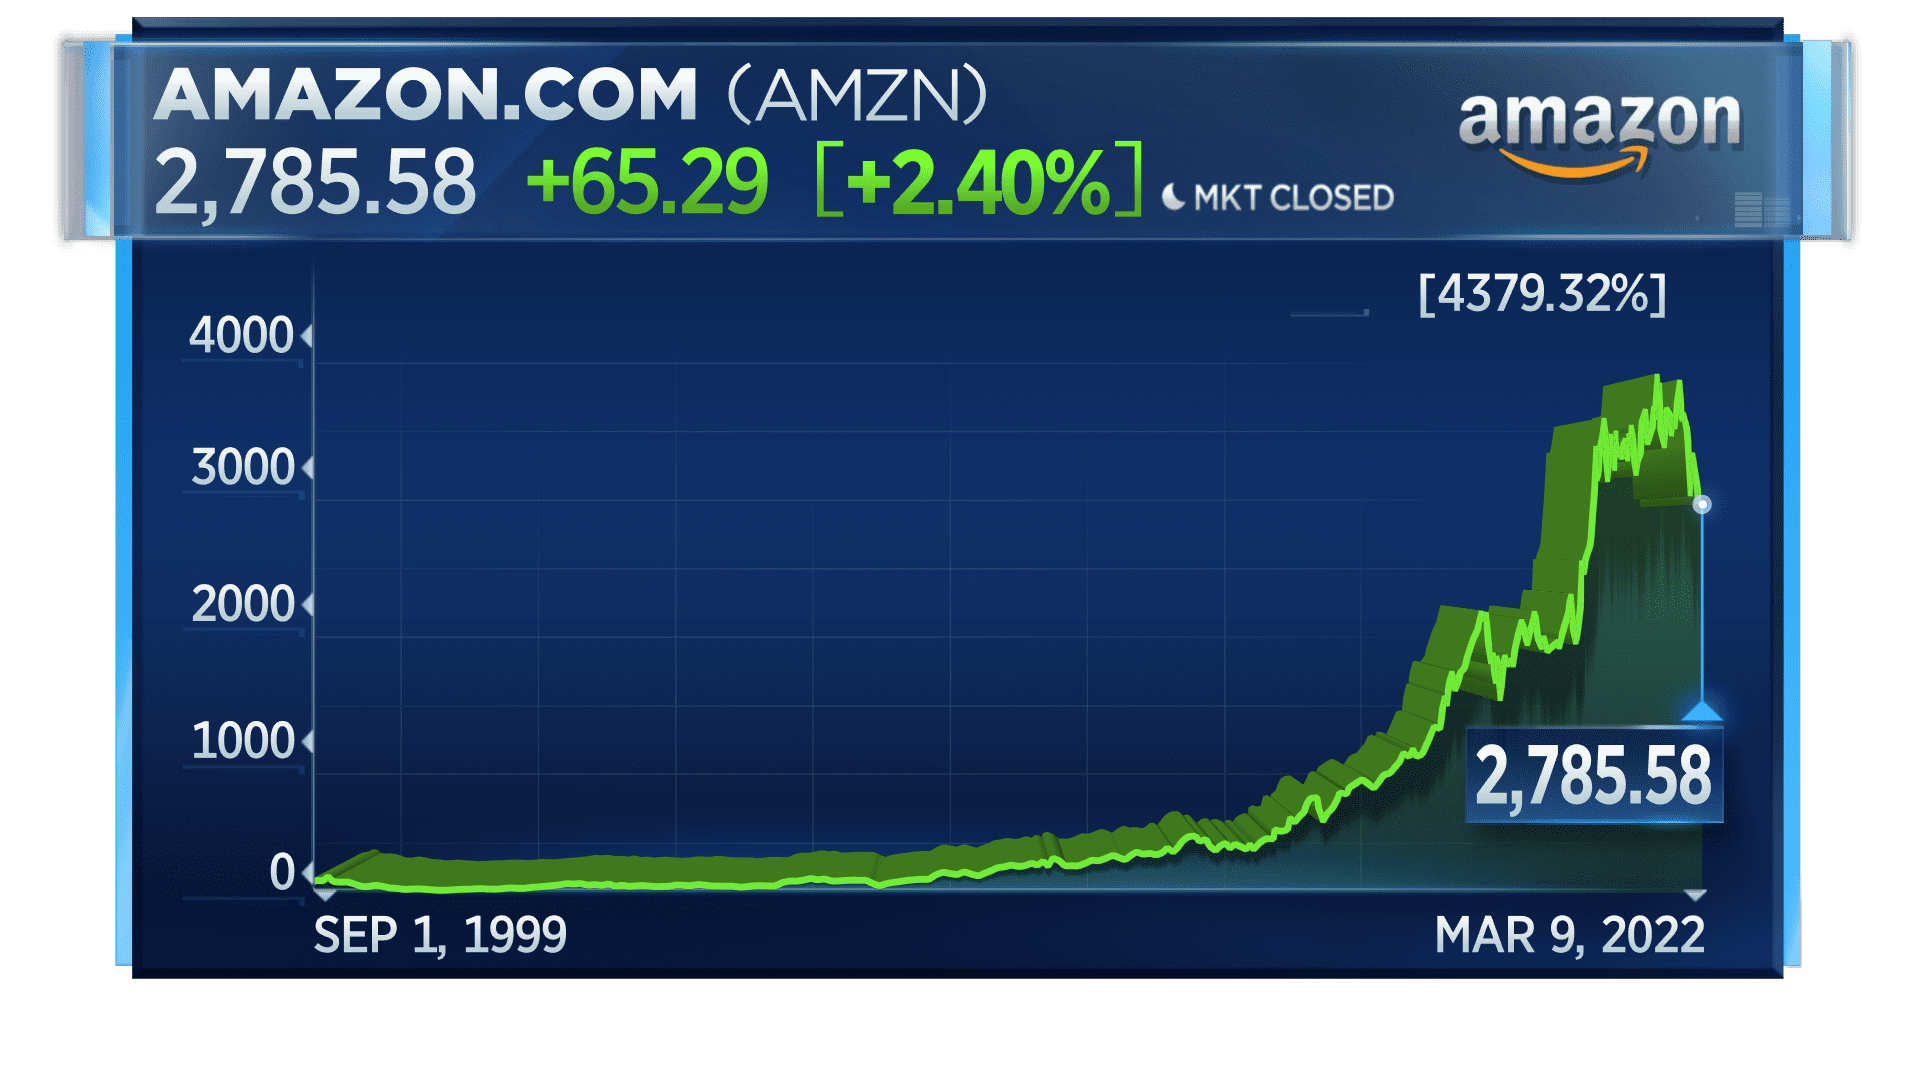 Amazon shares since last split in 1999